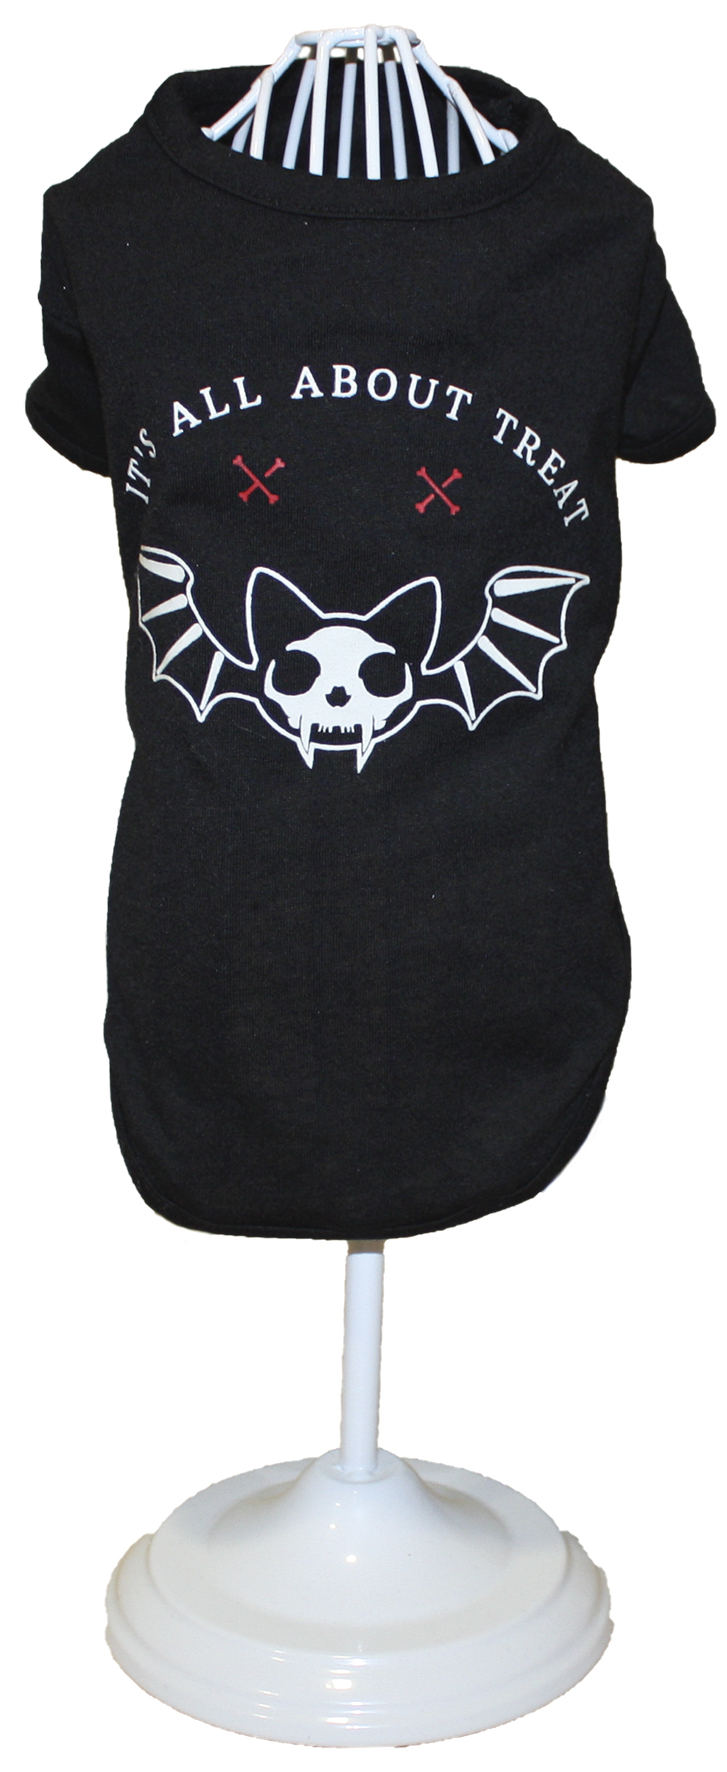 T-Shirt Tricky Skull Bat Croci 45 cm